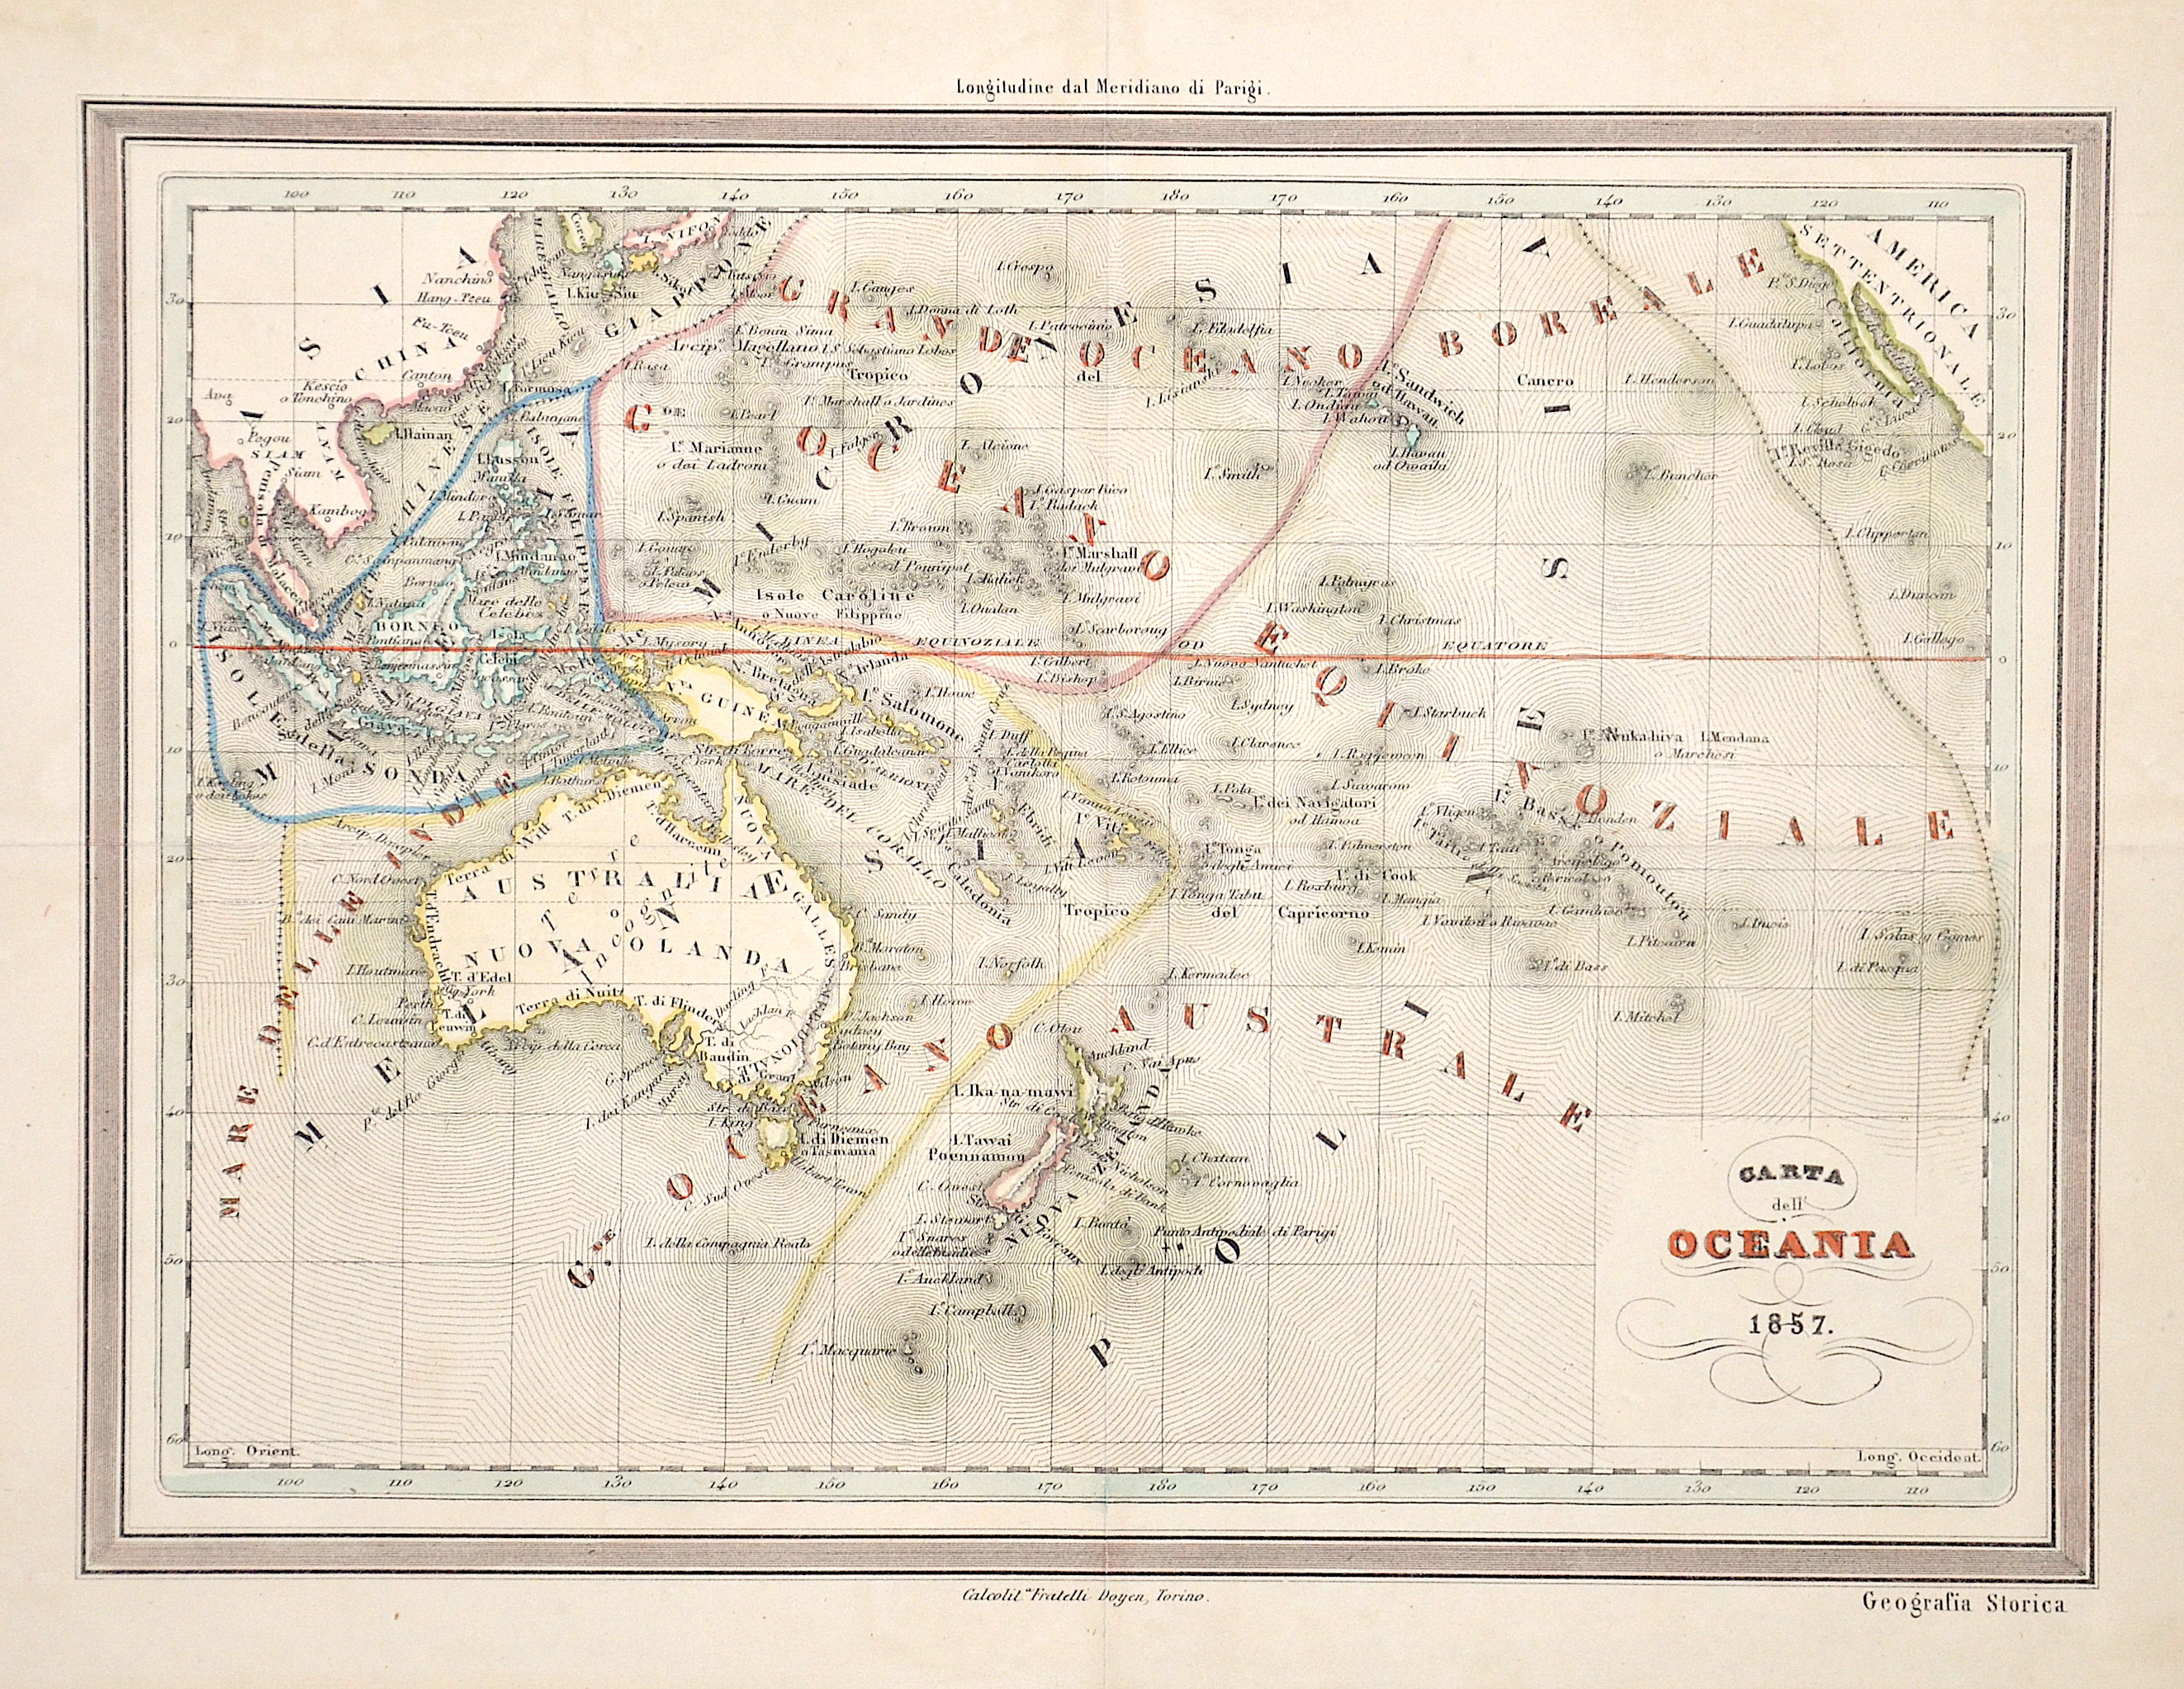 Doyen  Carta dell Oceania 1857.